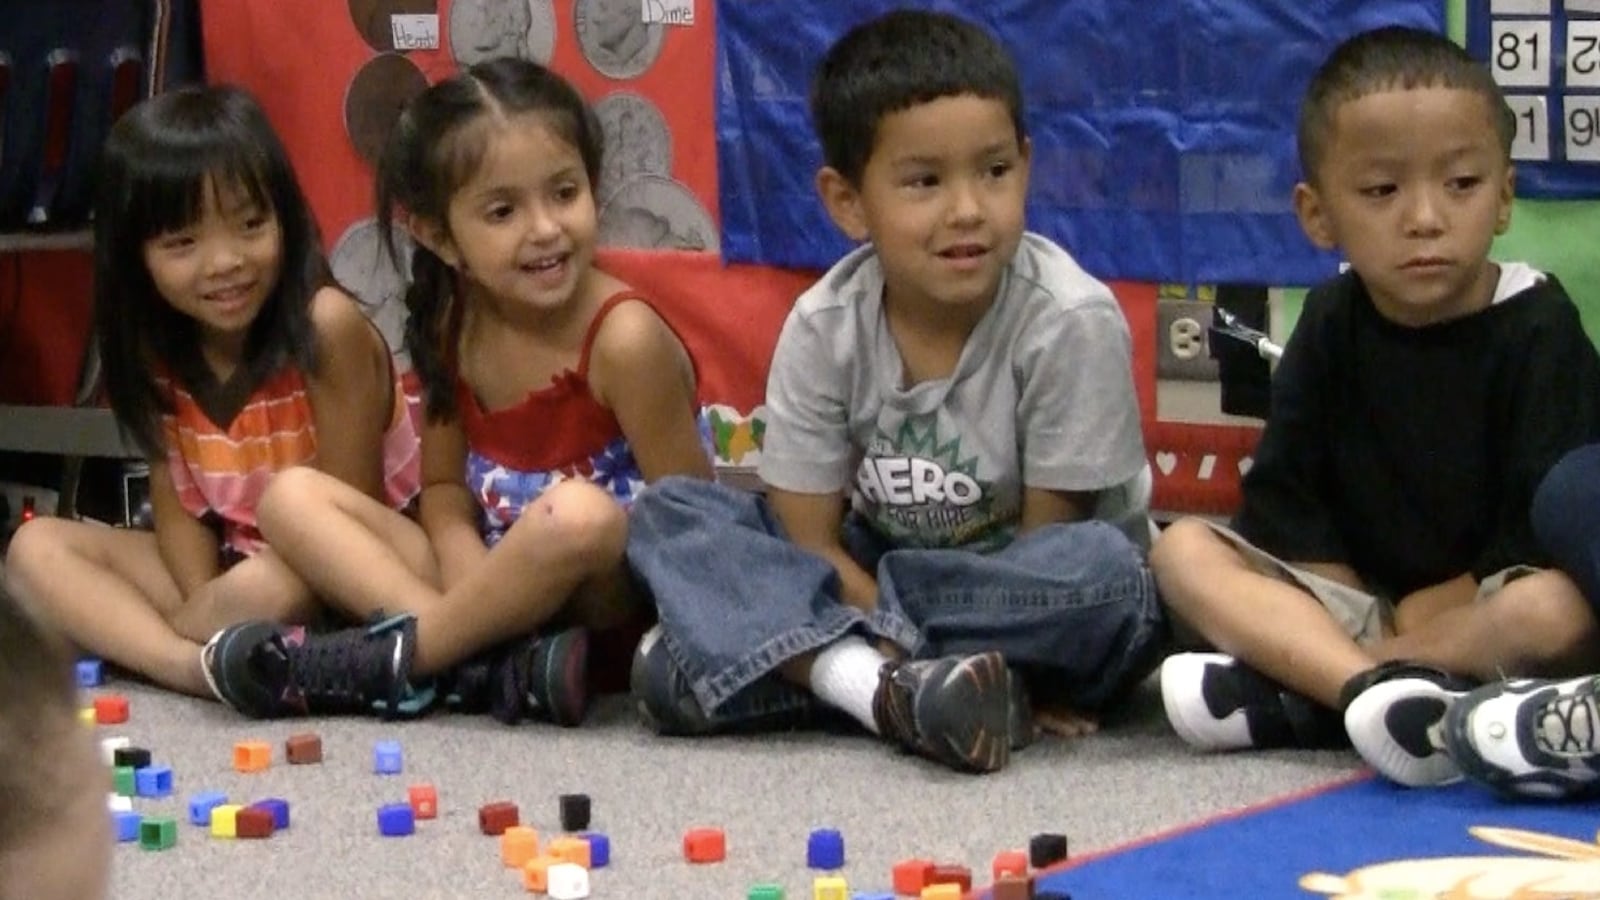 File photo of kindergarten students at Laredo Elementary in Aurora.